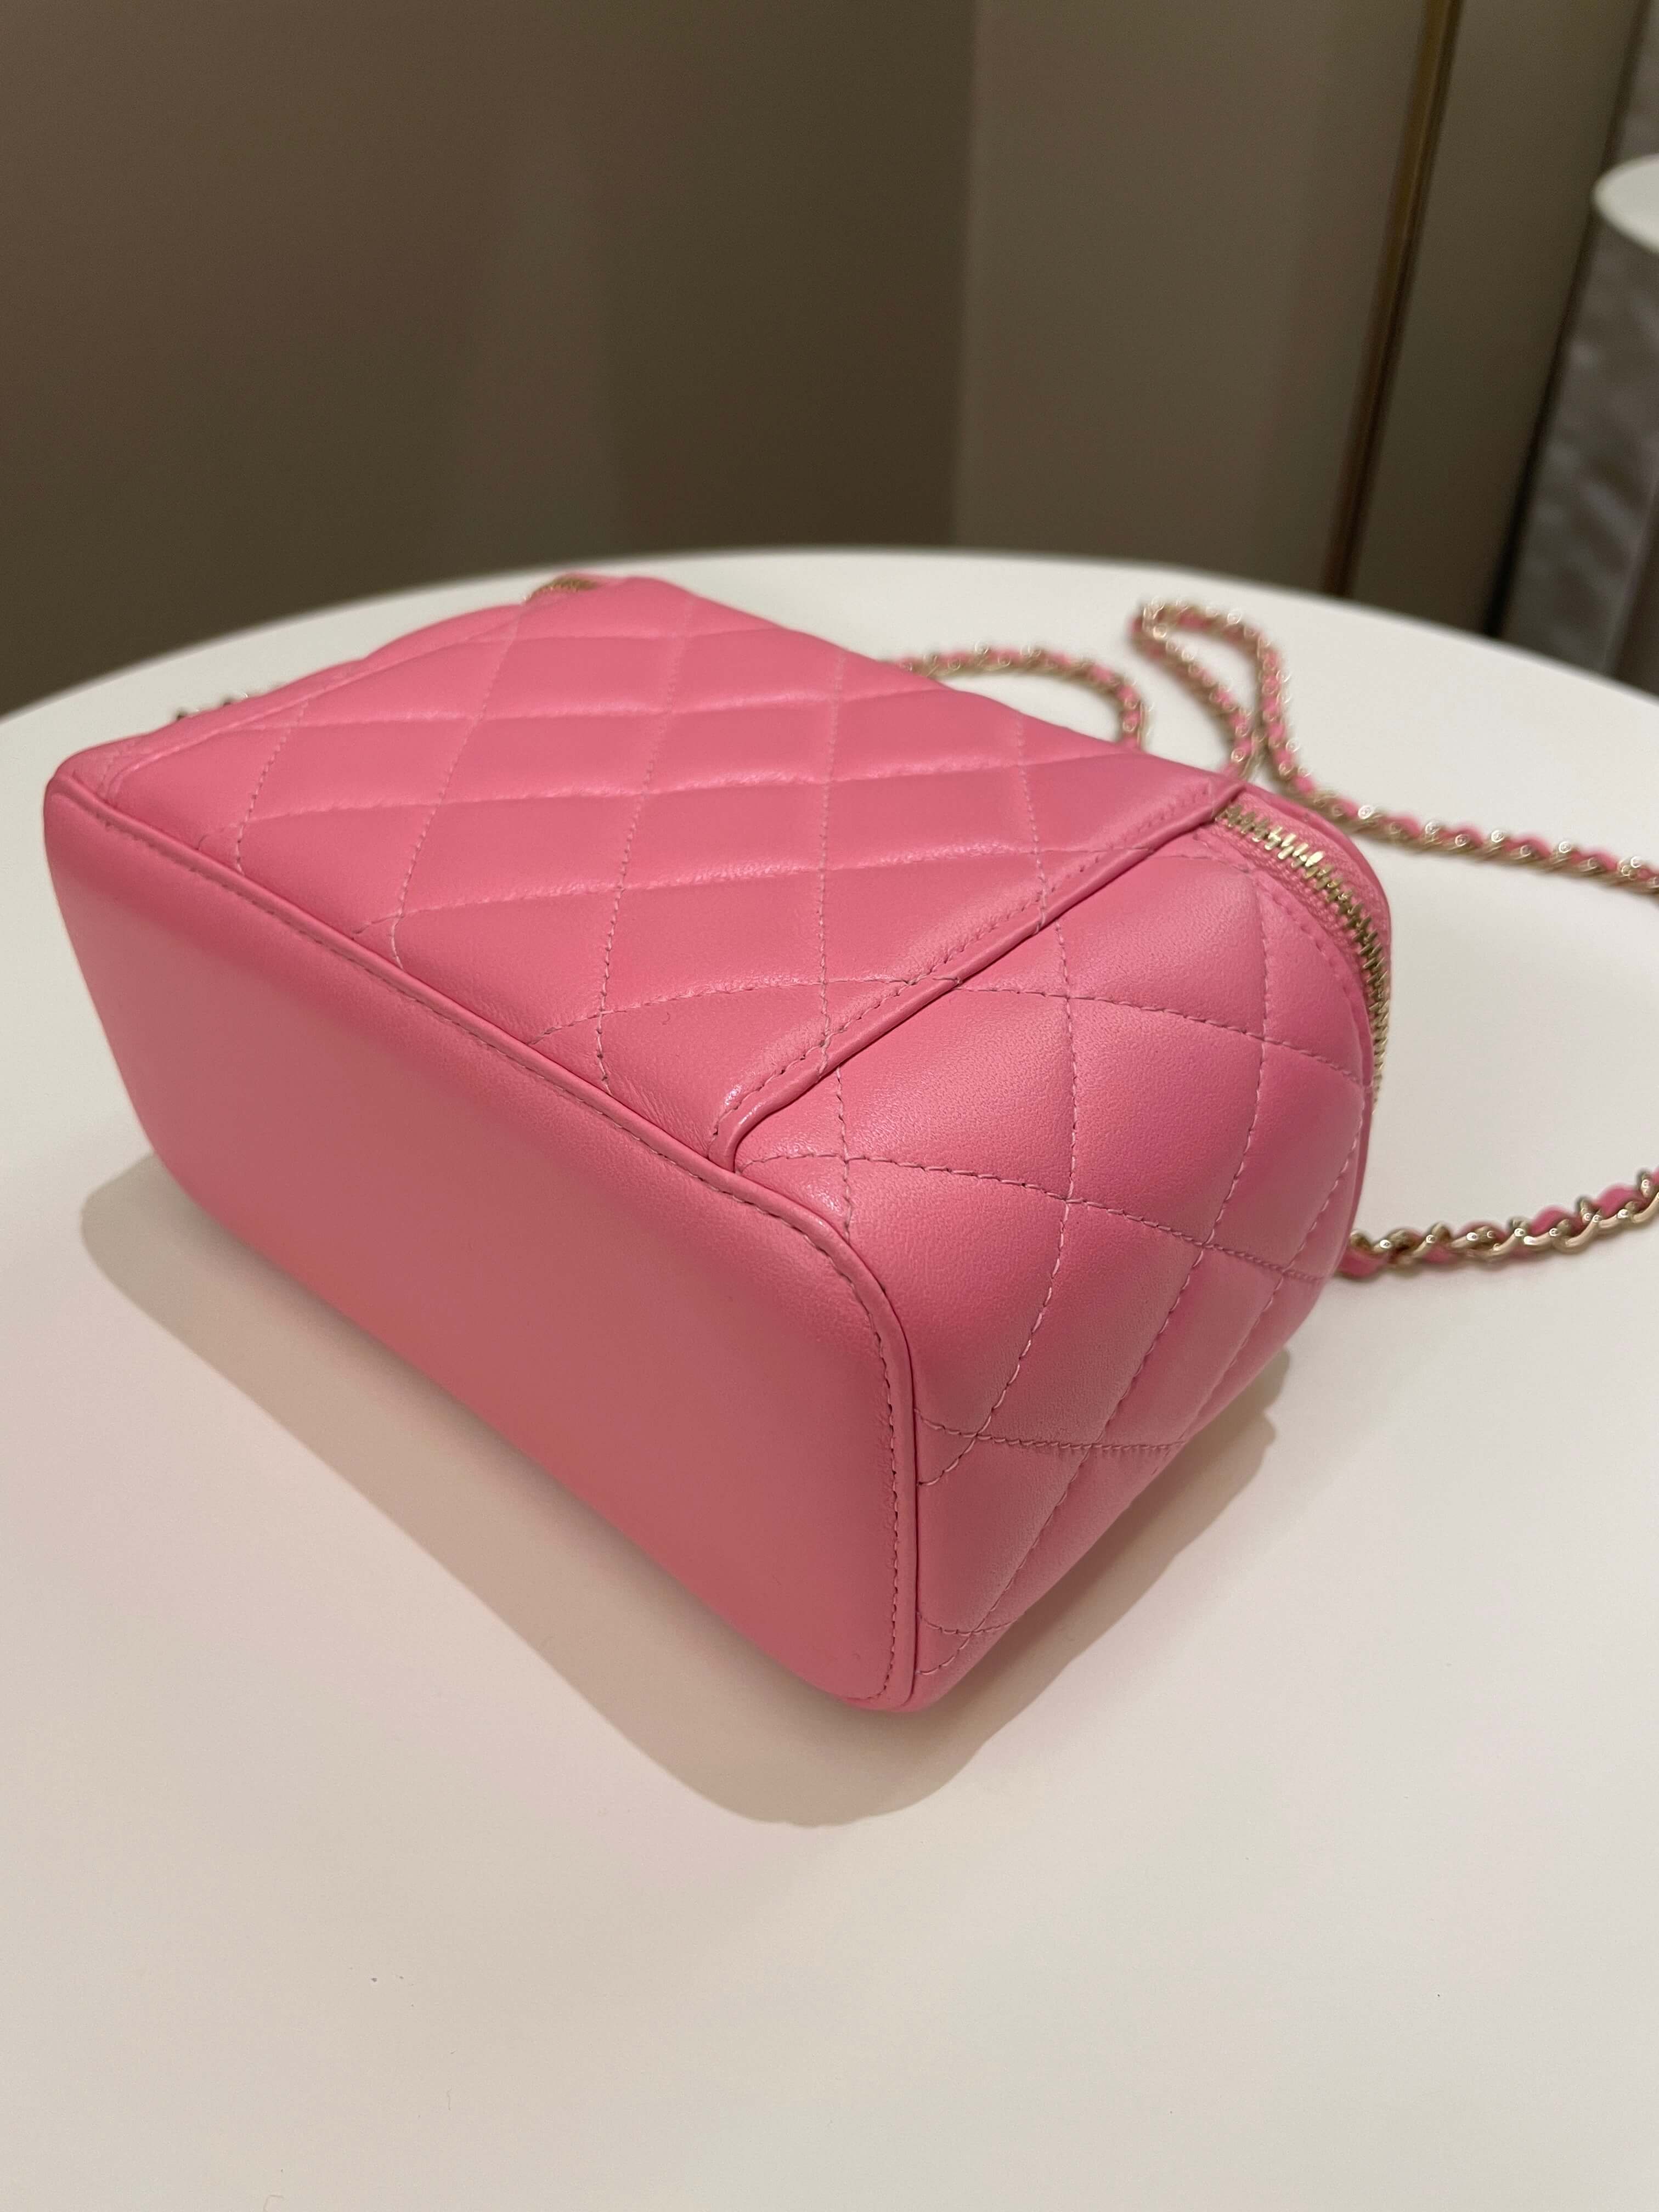 Chanel Trendy CC Vanity Case Pink Pink Lambskin